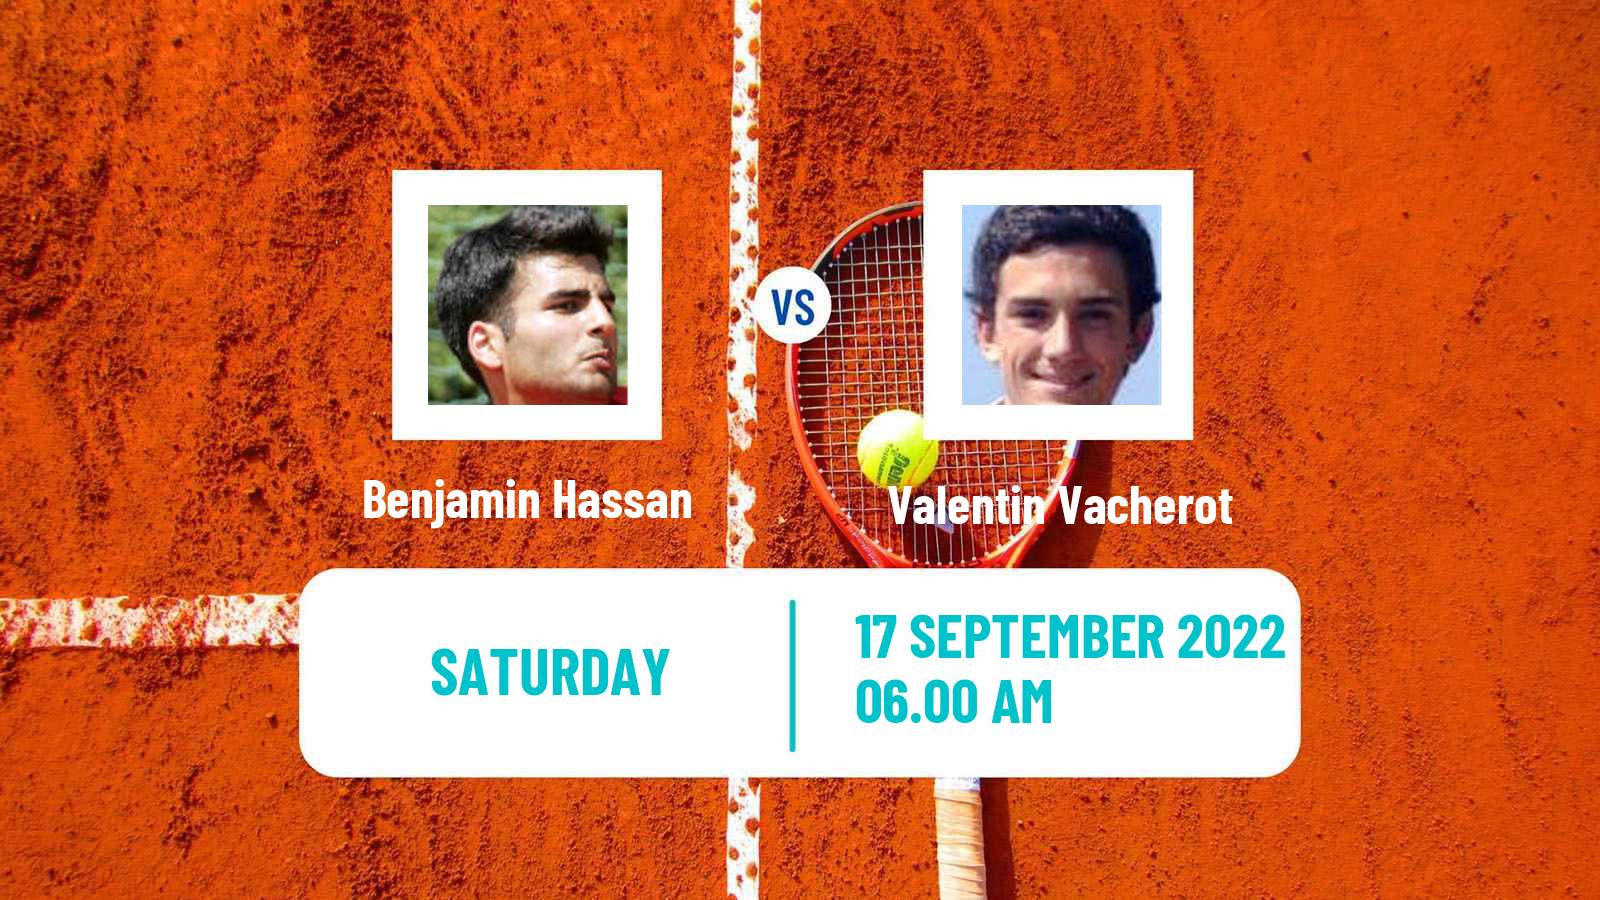 Tennis Davis Cup World Group II Benjamin Hassan - Valentin Vacherot